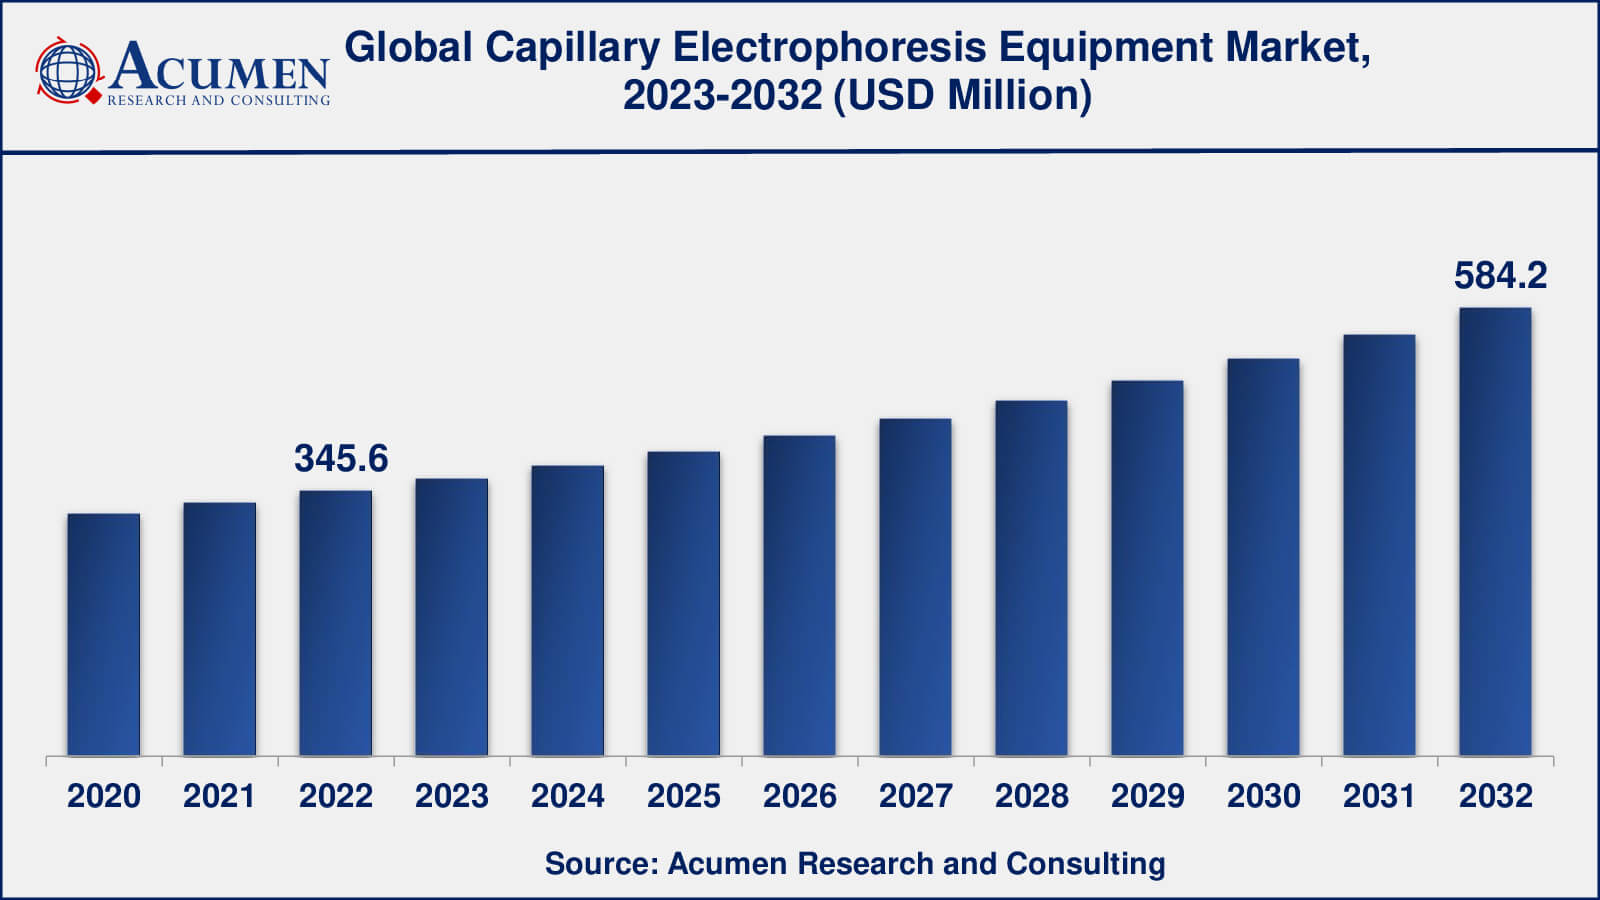 Capillary Electrophoresis Equipment Market Analysis Period